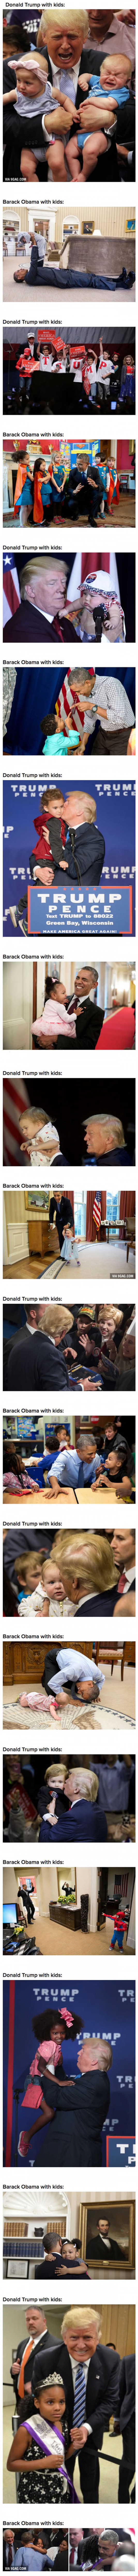 Trump With Kids Vs ObamaWith Kids